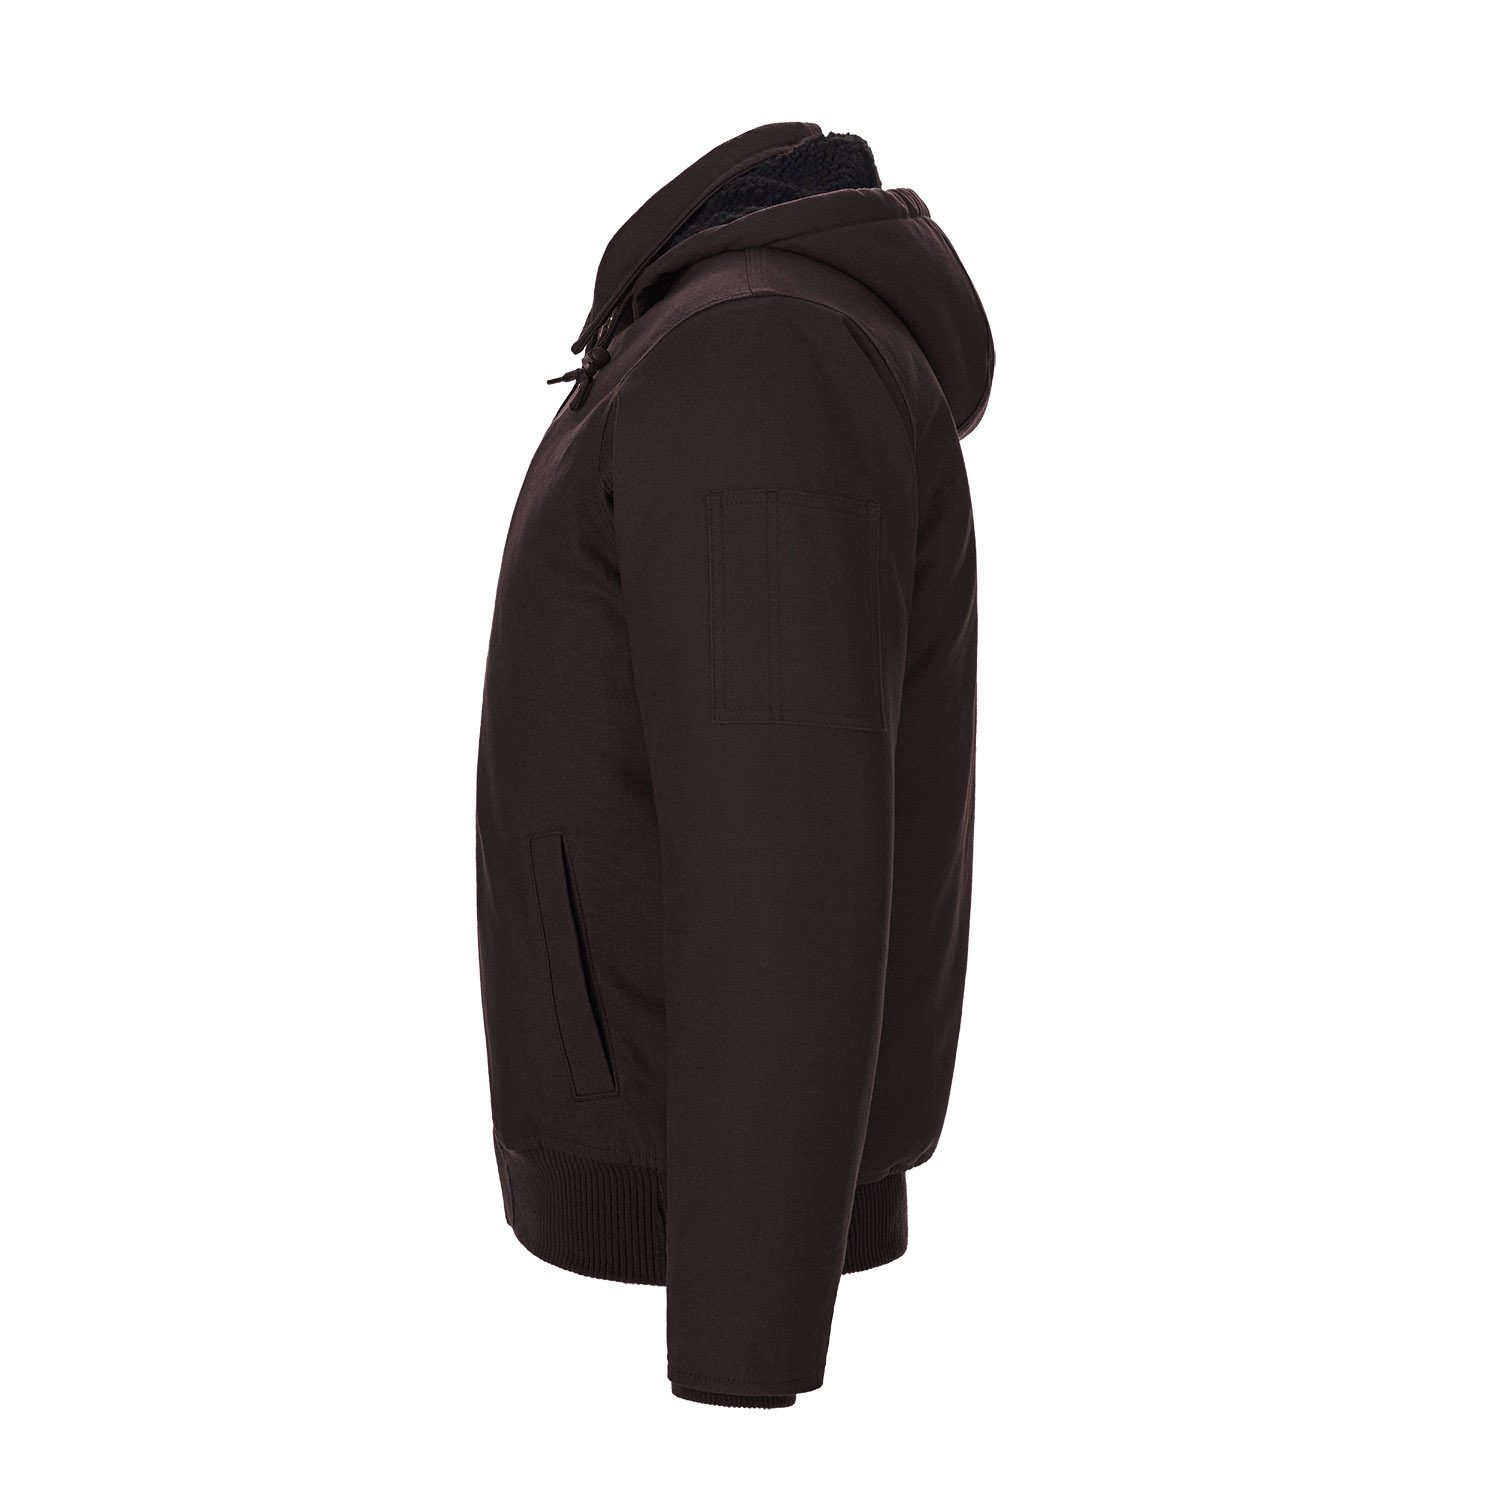 Canada Sportswear Men's Bomber Jacket with Sherpa Lining #L00910 Dark Chocolate Side